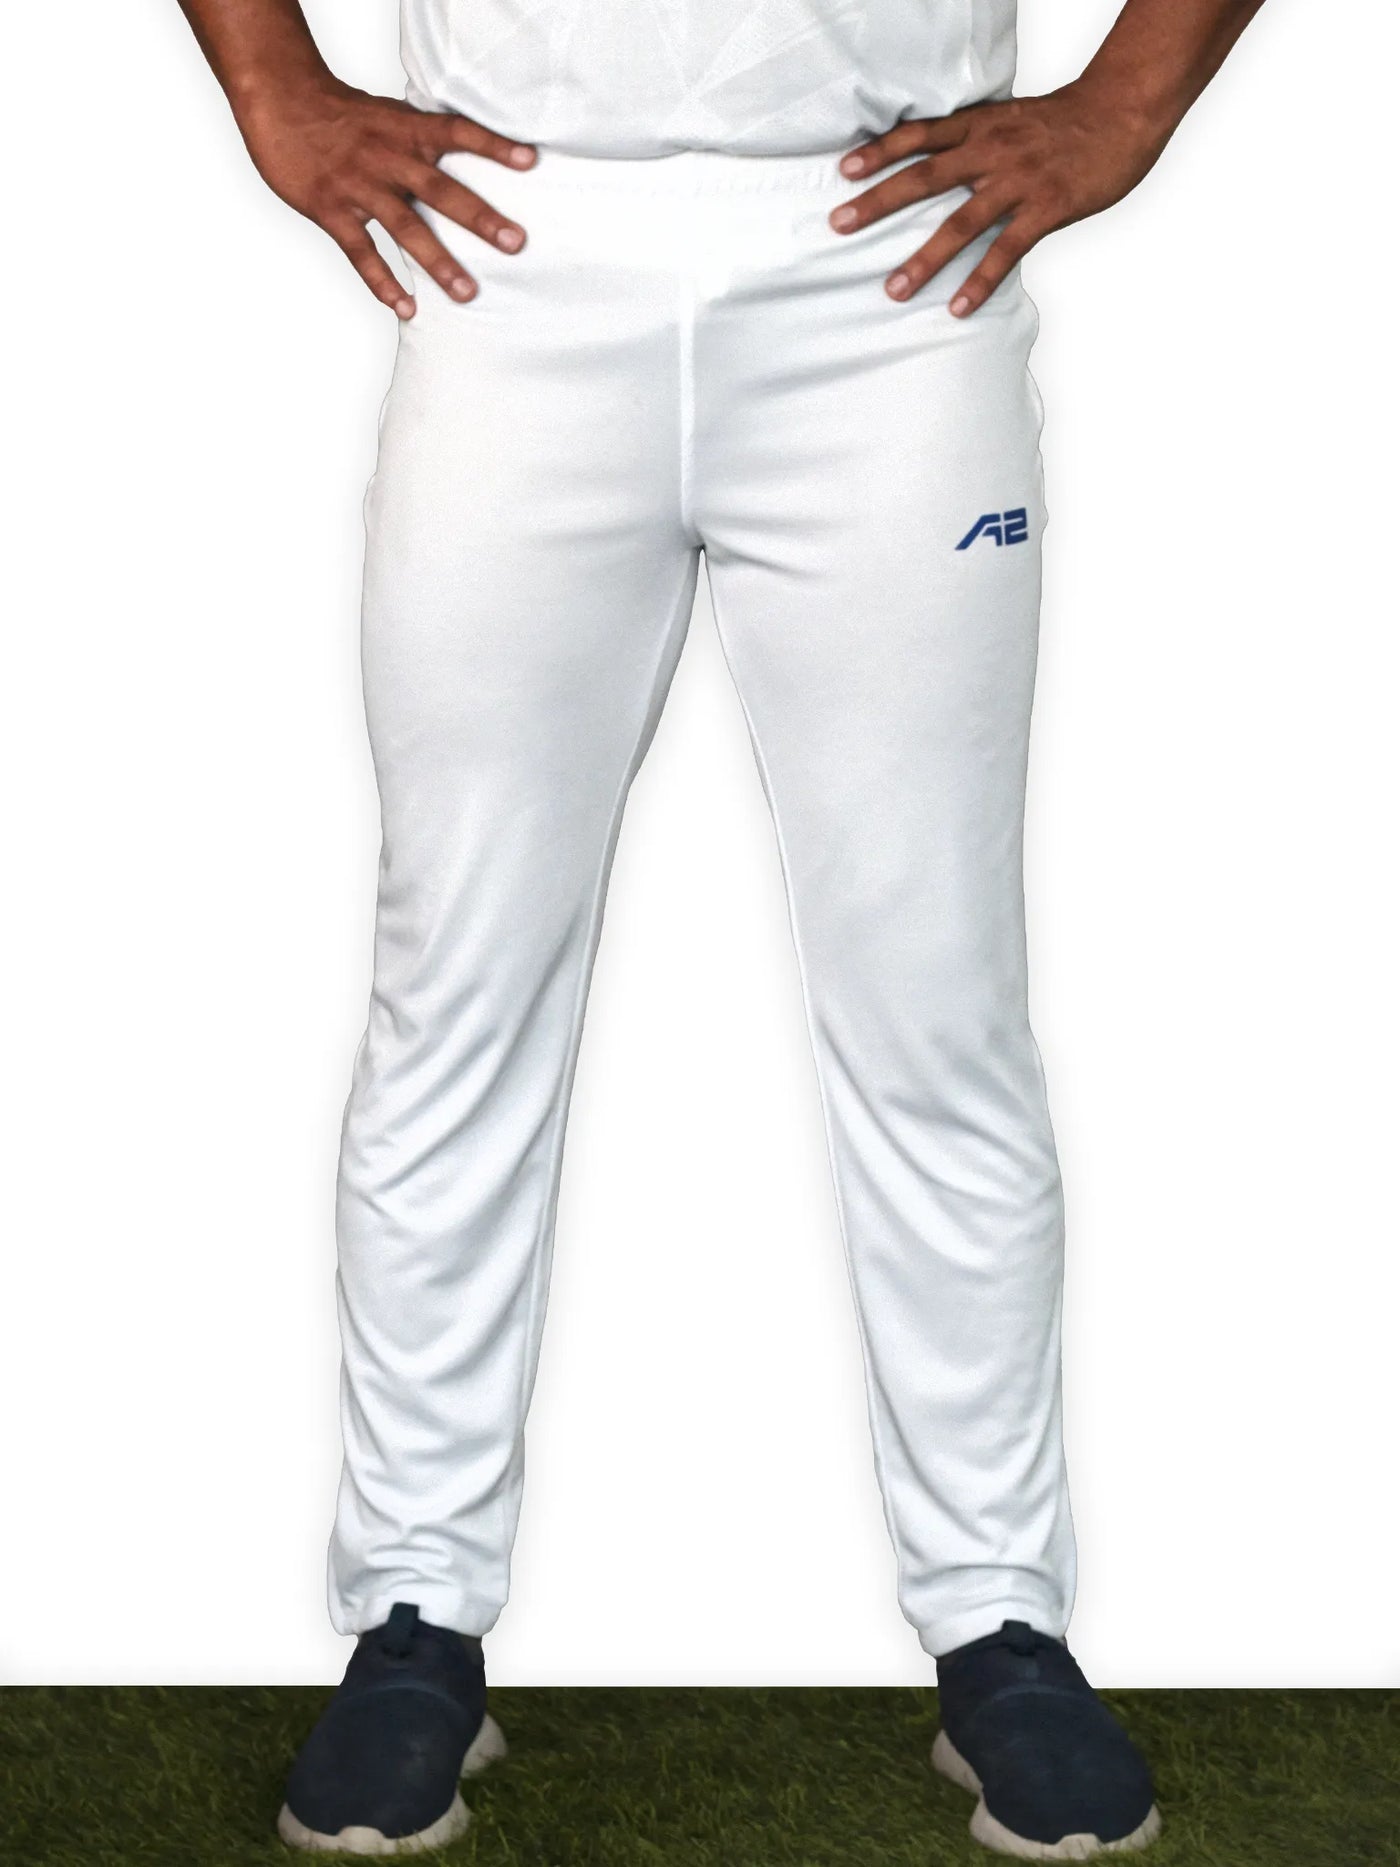 White Jacquard Cricket Match Pants